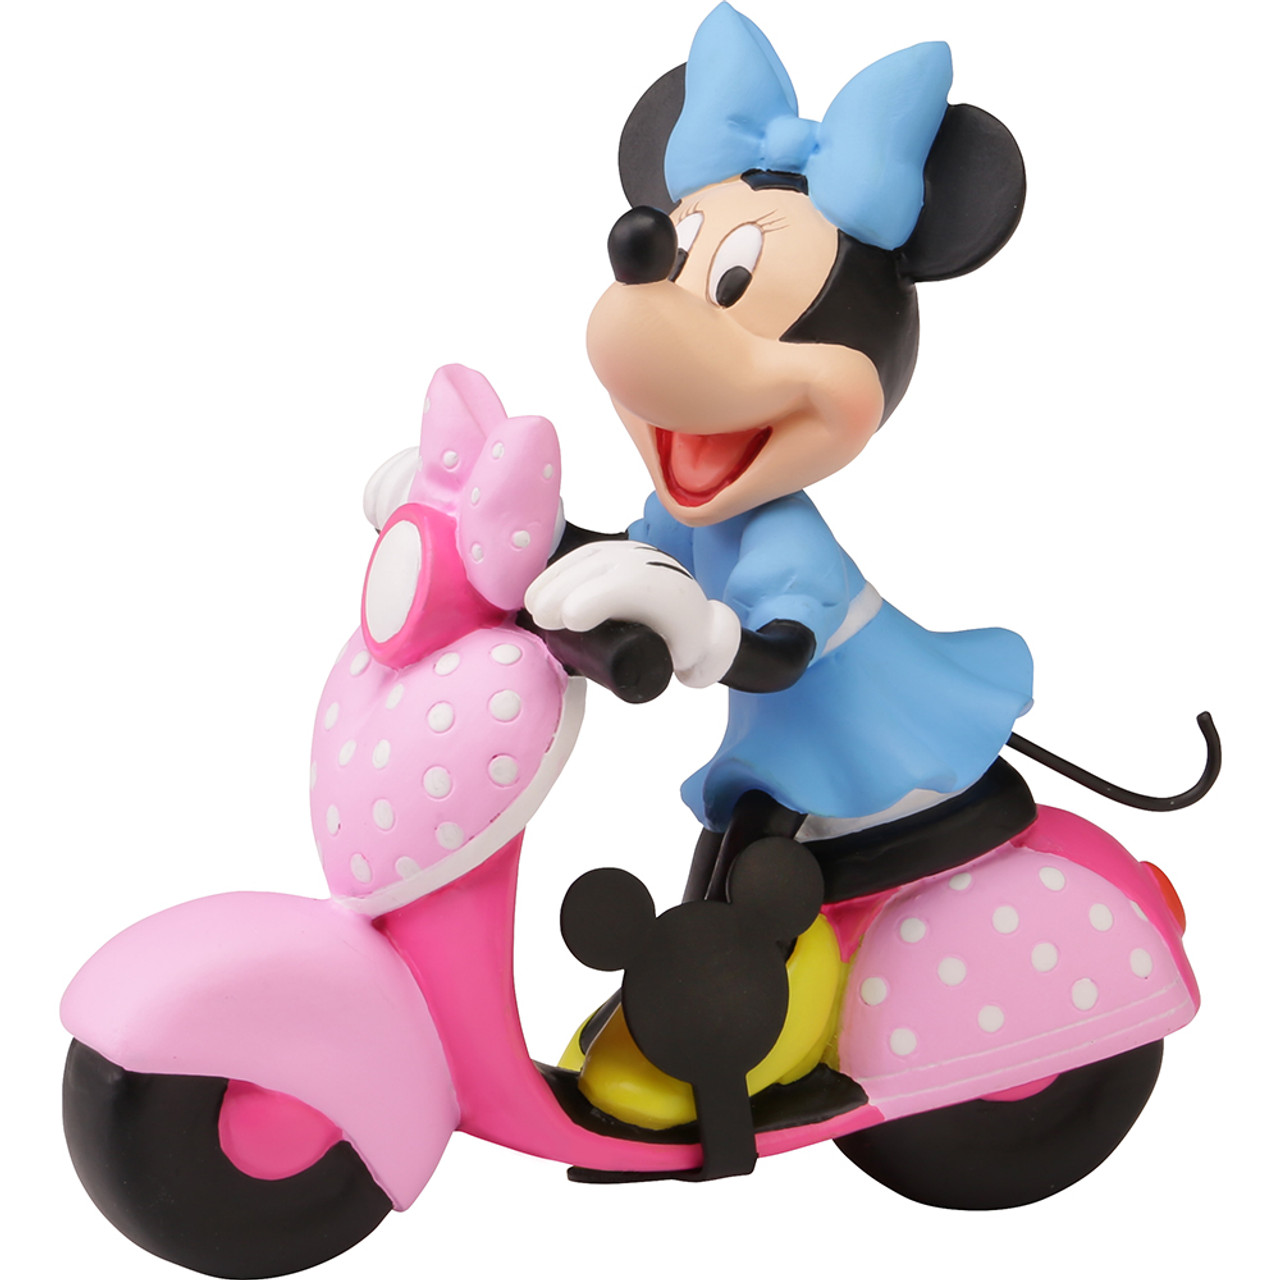 Precious Moments 201708 Disney Figurine Parade Mouse Resin/Vinyl Collectible Disney Showcase Minnie